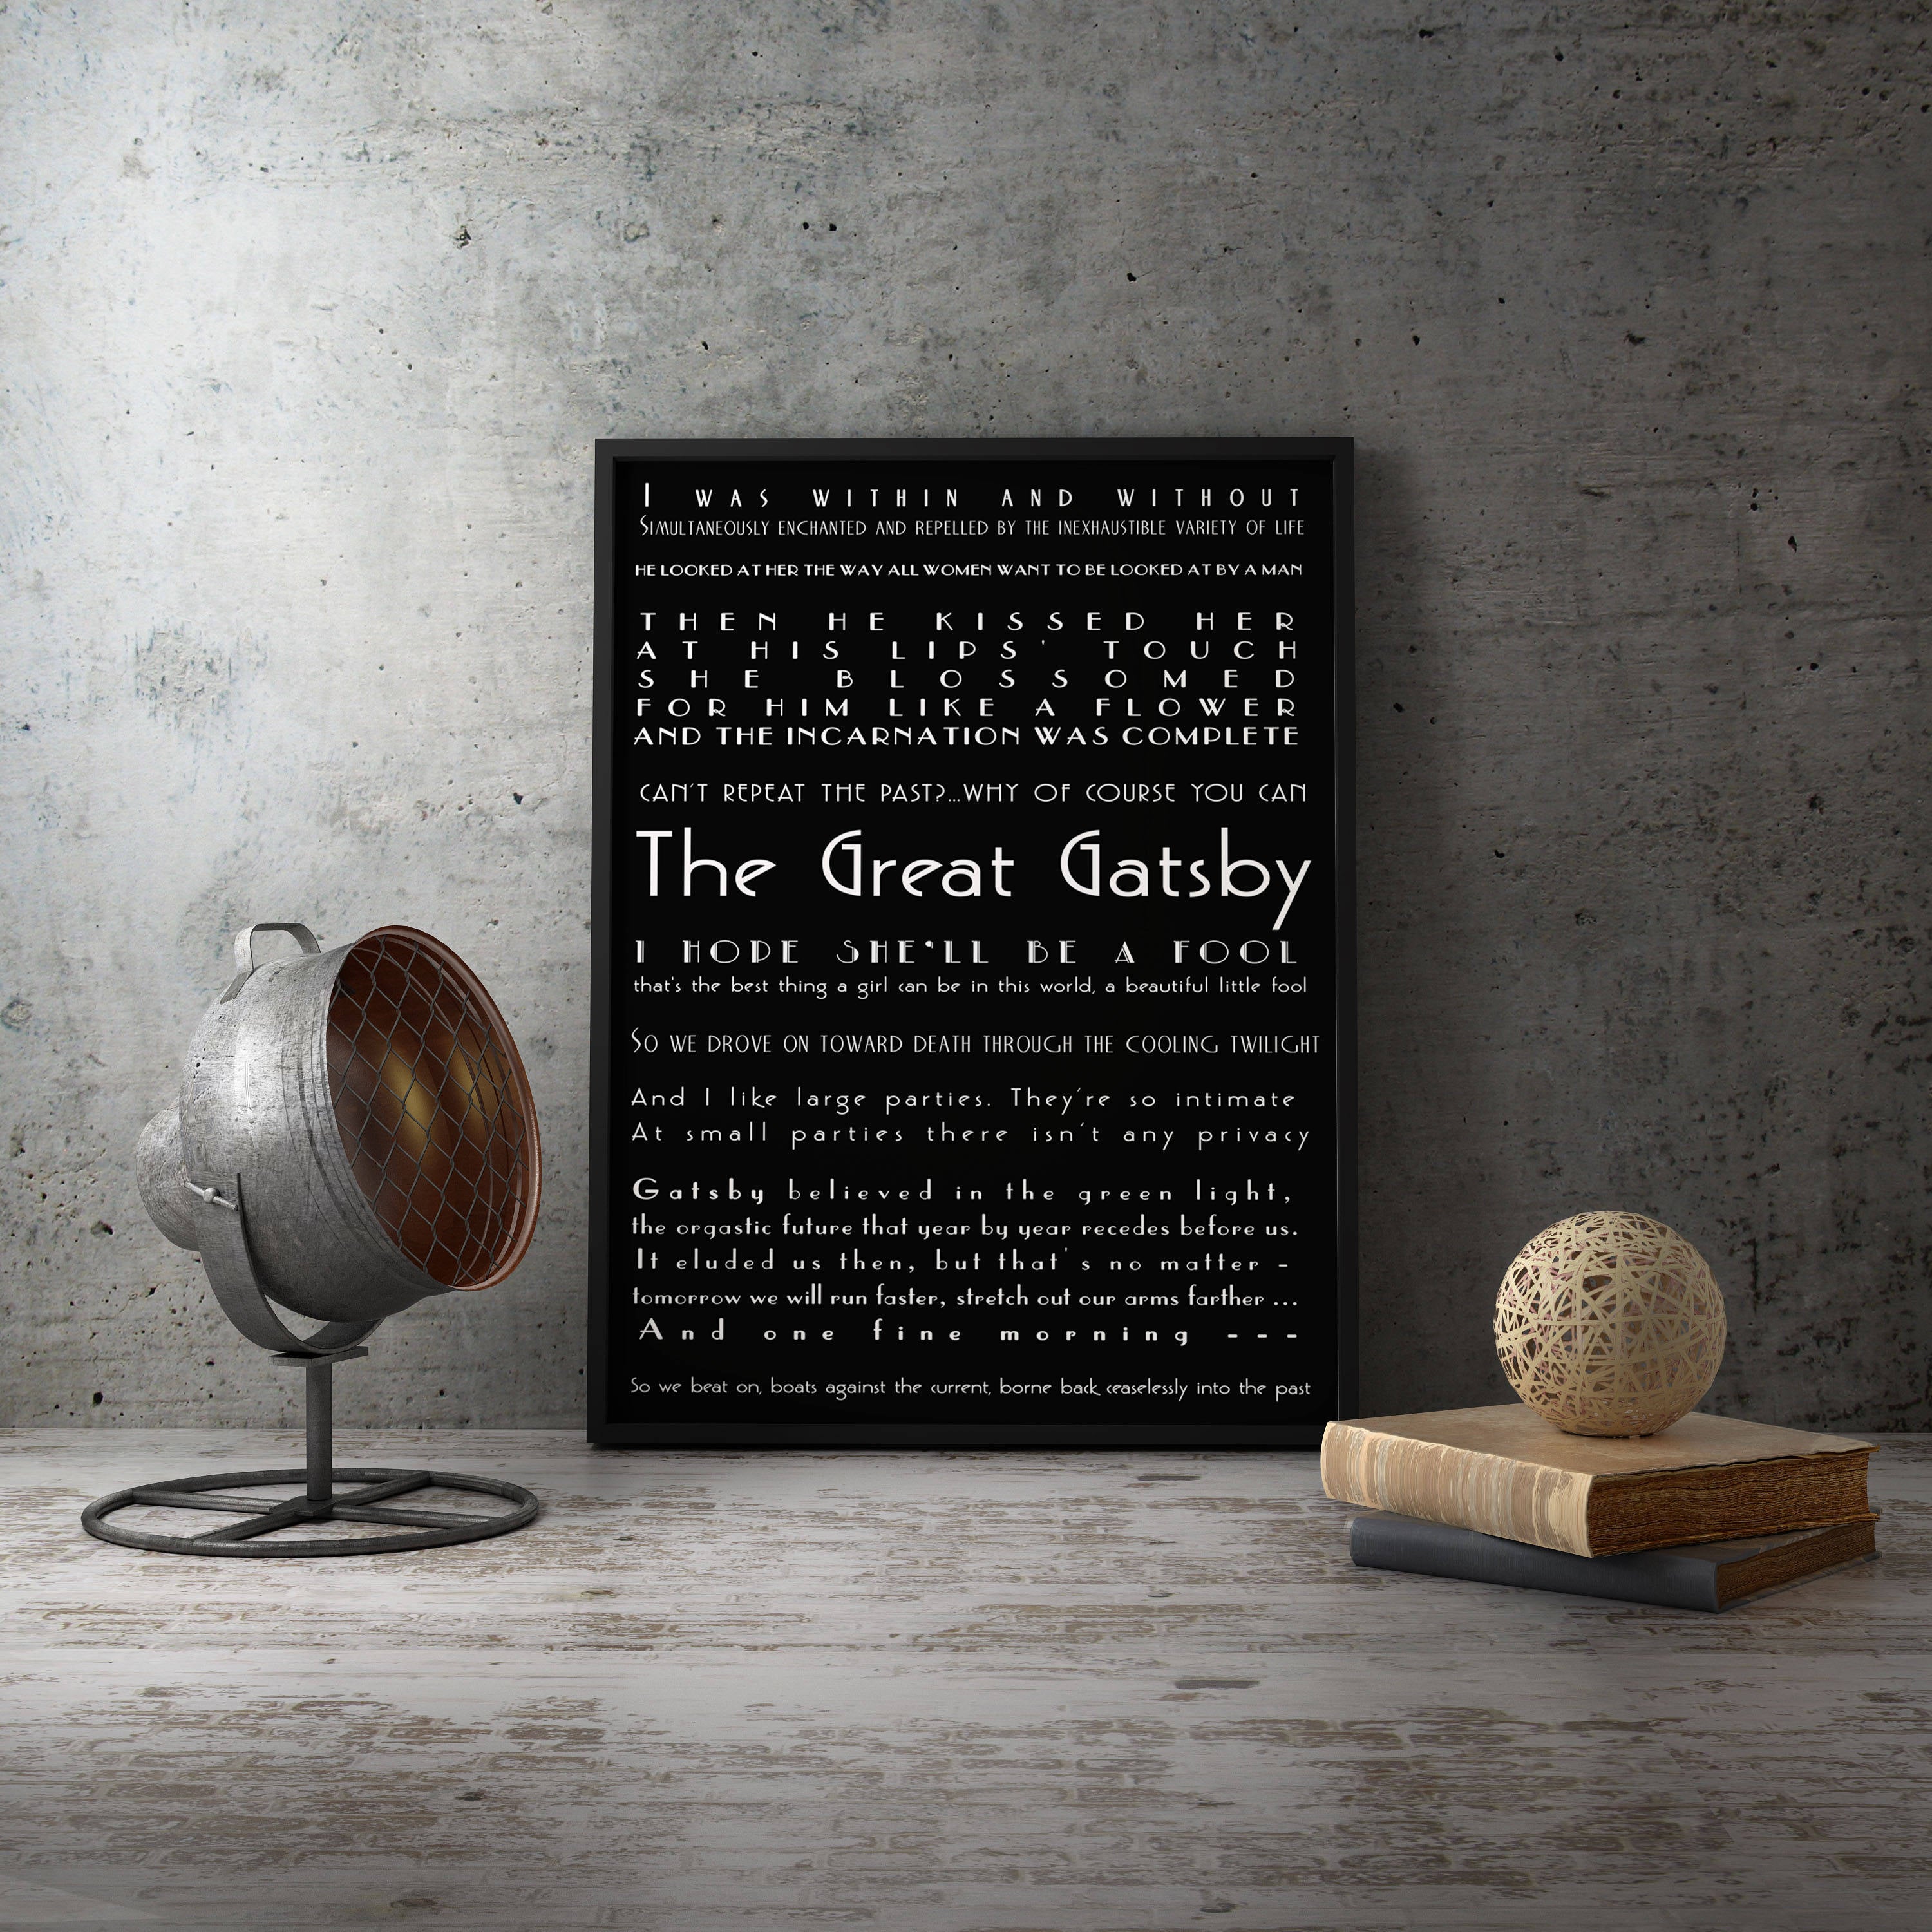 Gatsby Framed Art Print - Great Gatsby Quotes Print, Literary Art Poster, framed print, F Scott Fitzgerald book bedroom decor, Black & White - BookQuoteDecor